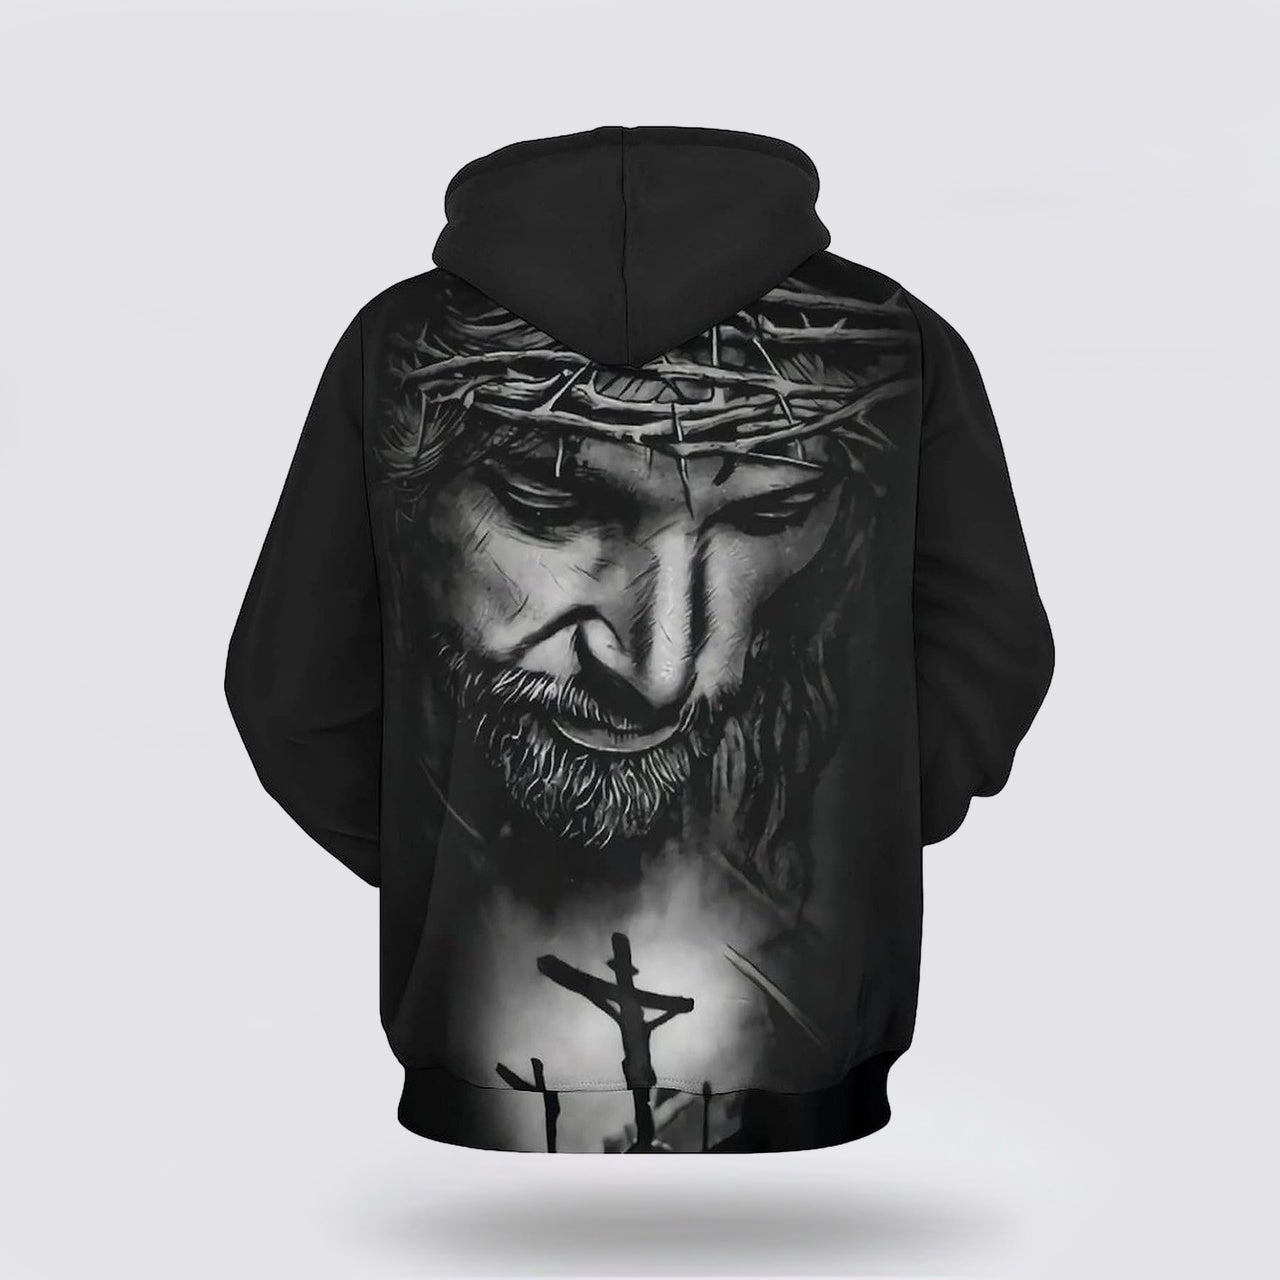 Jesus With Crown Of Thorns 3d Hoodies For Women Men - Christian Apparel Hoodies